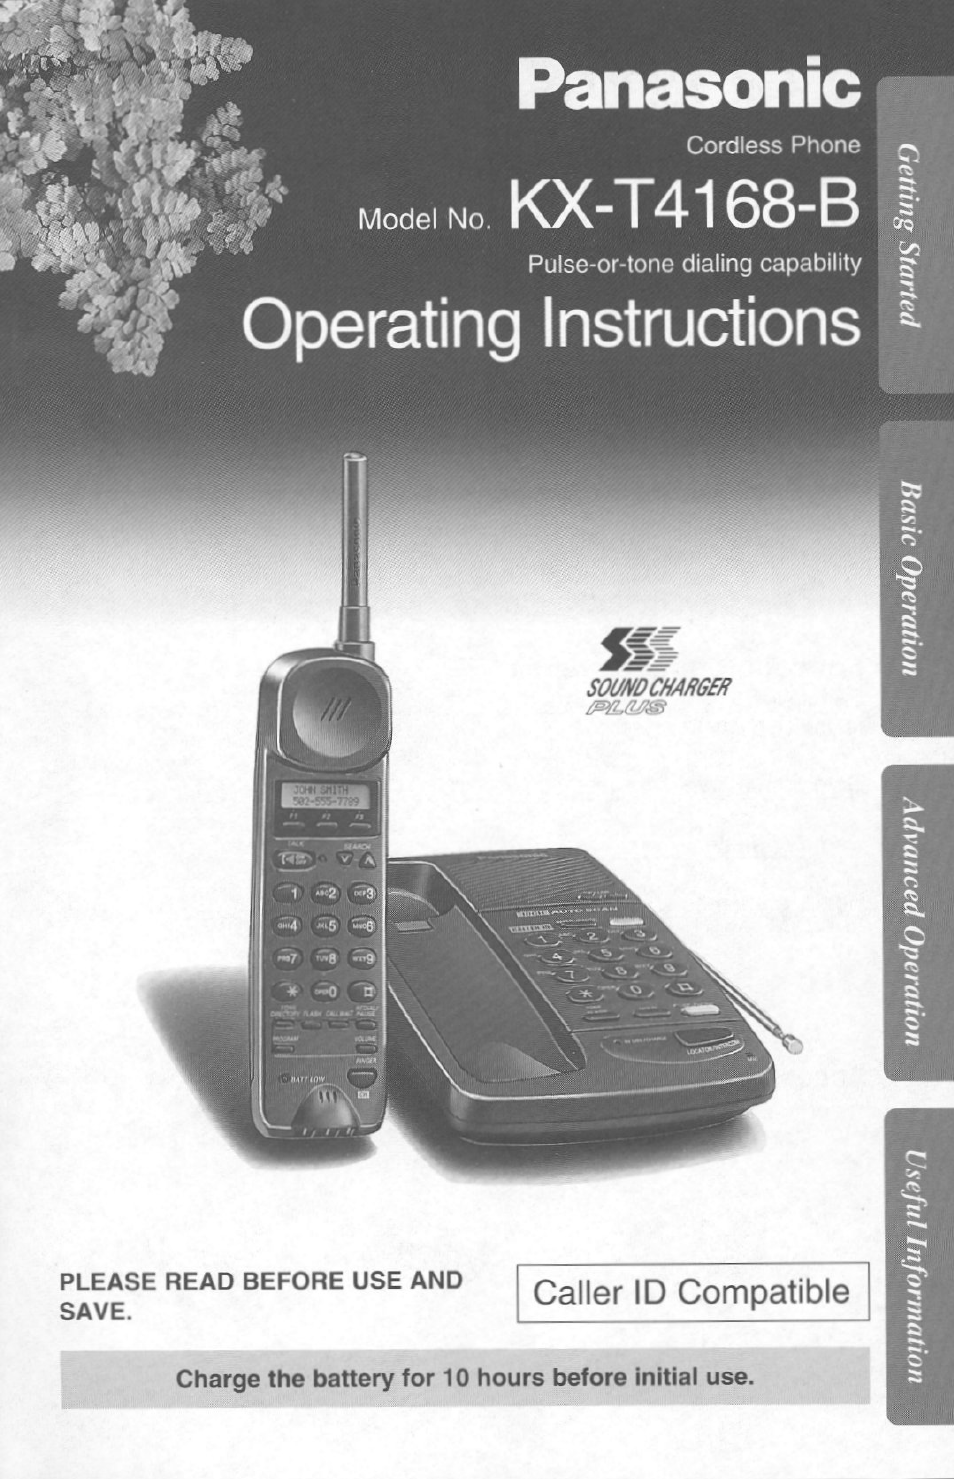 Panasonic SOUND CHANGER KX-T4168-B User Manual | 52 pages